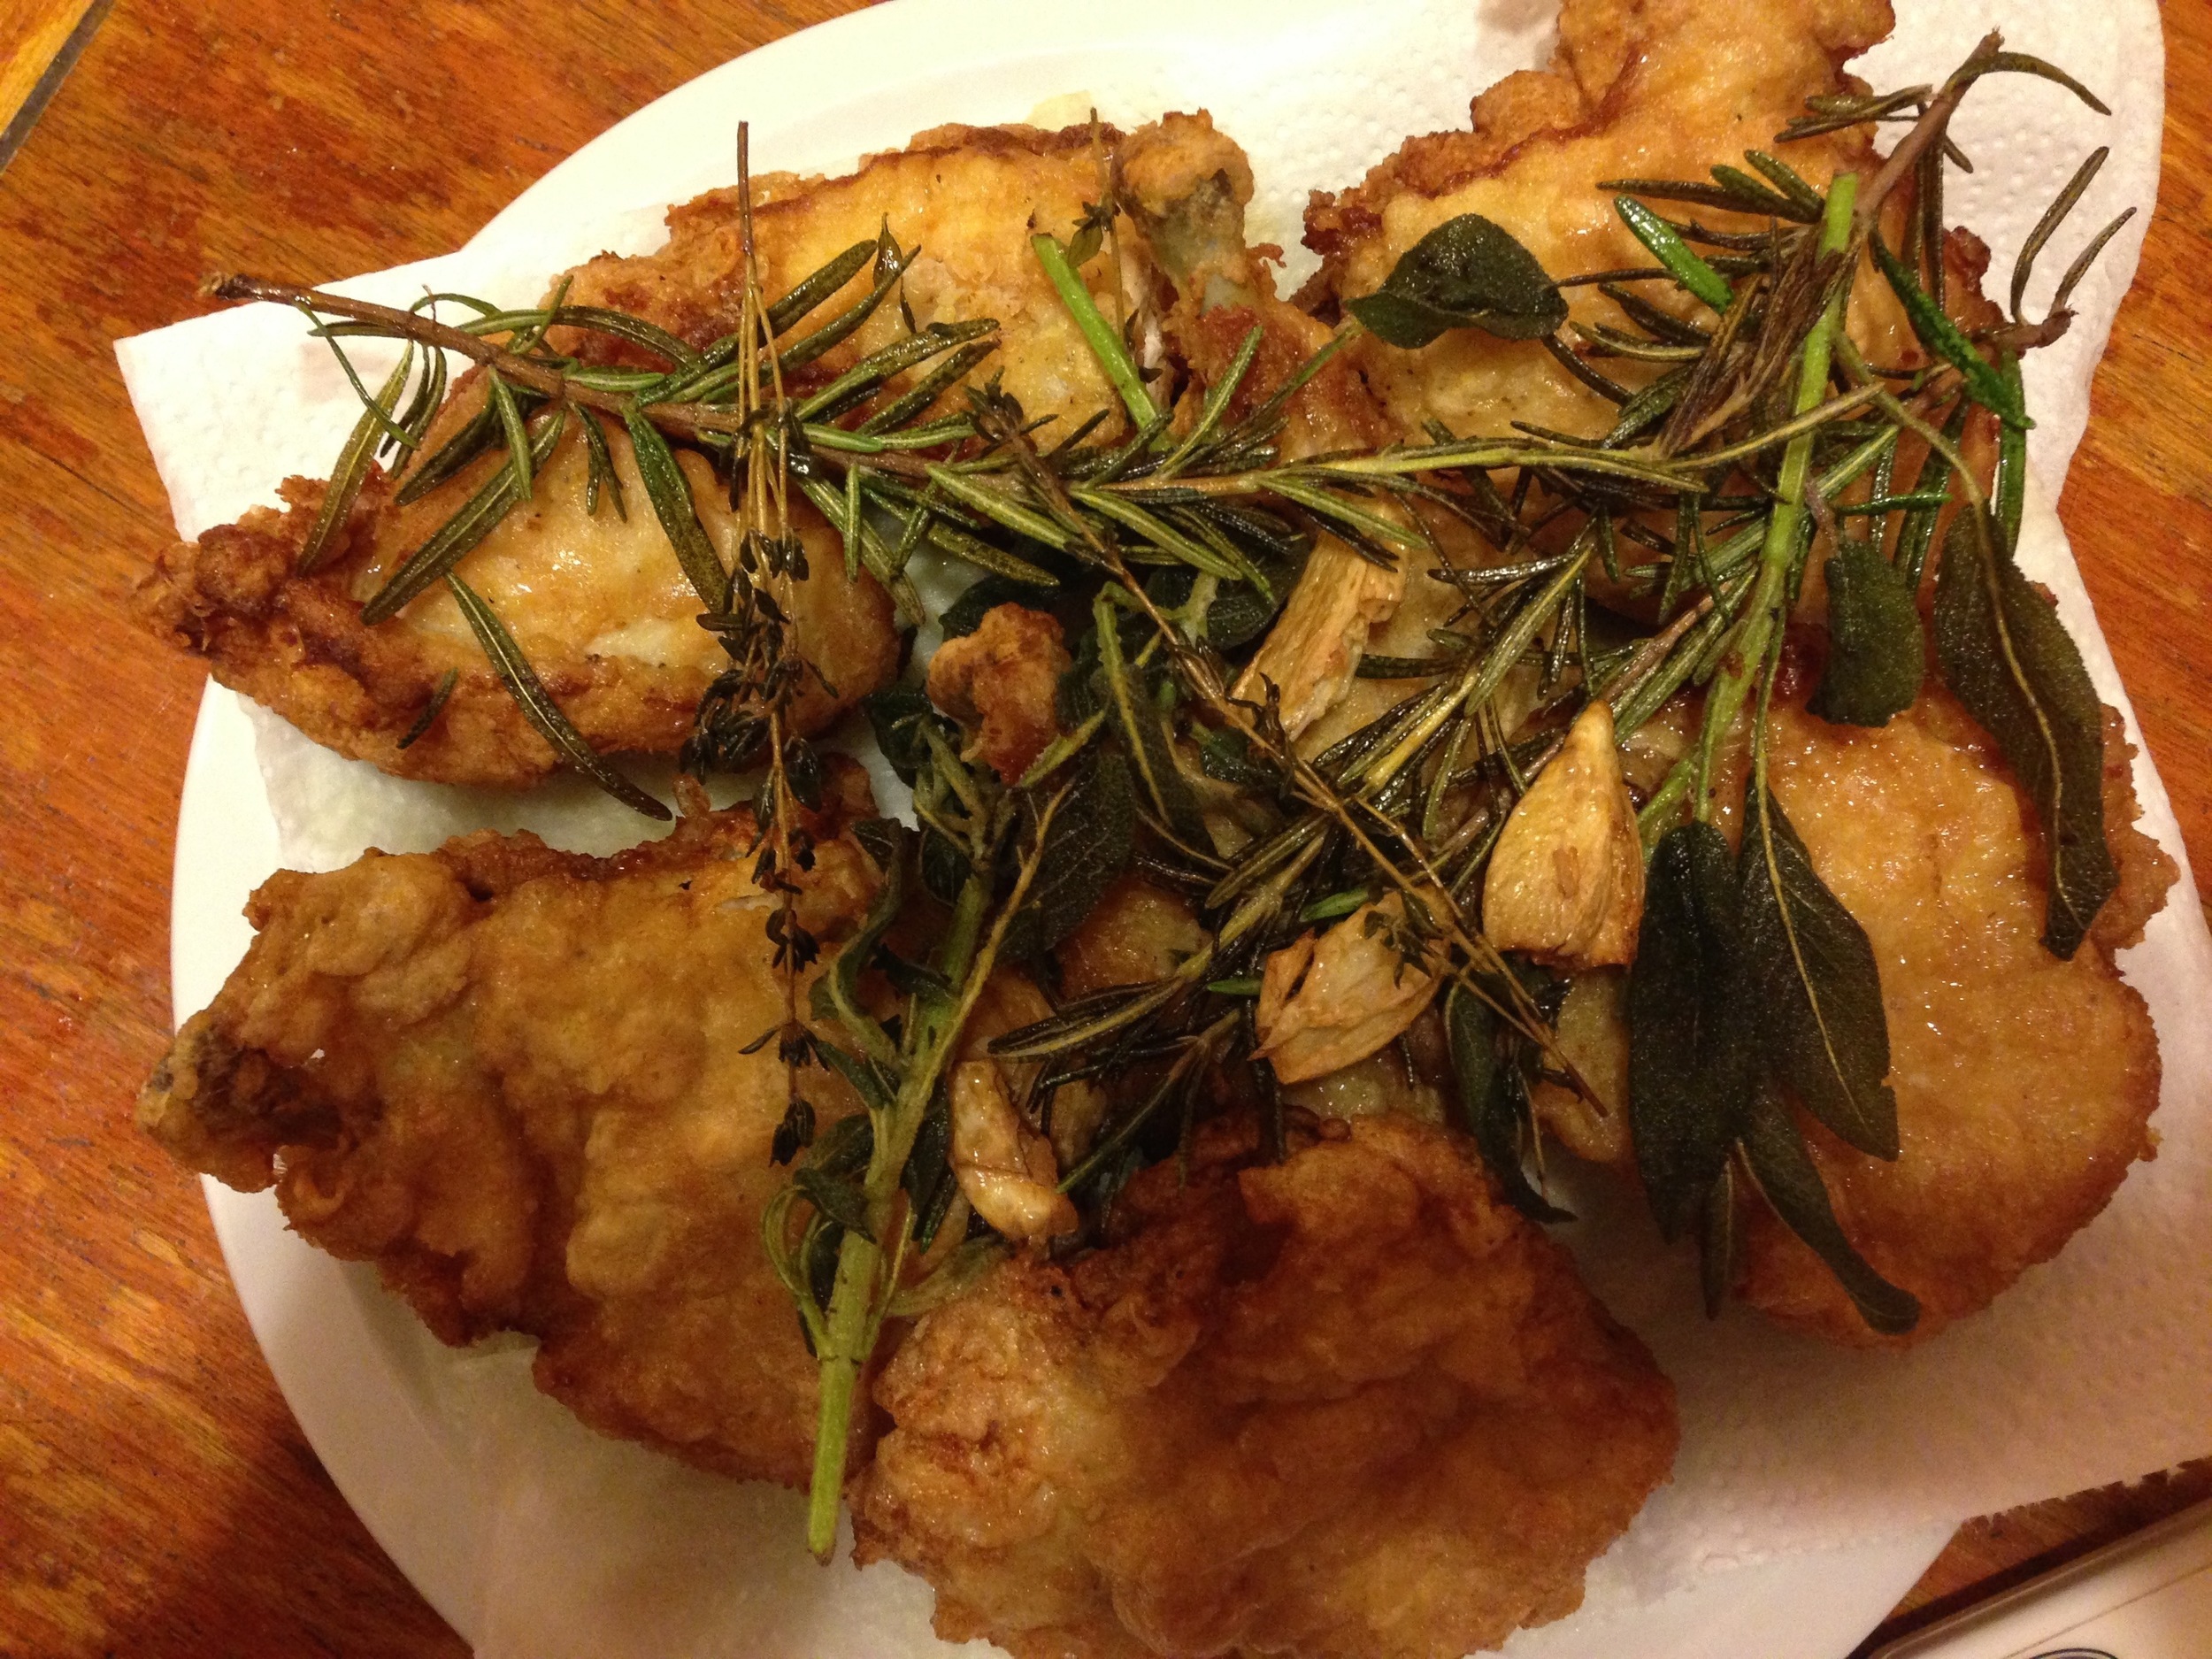 Yuzu Fried Chicken with Fried Herbs and Garlic